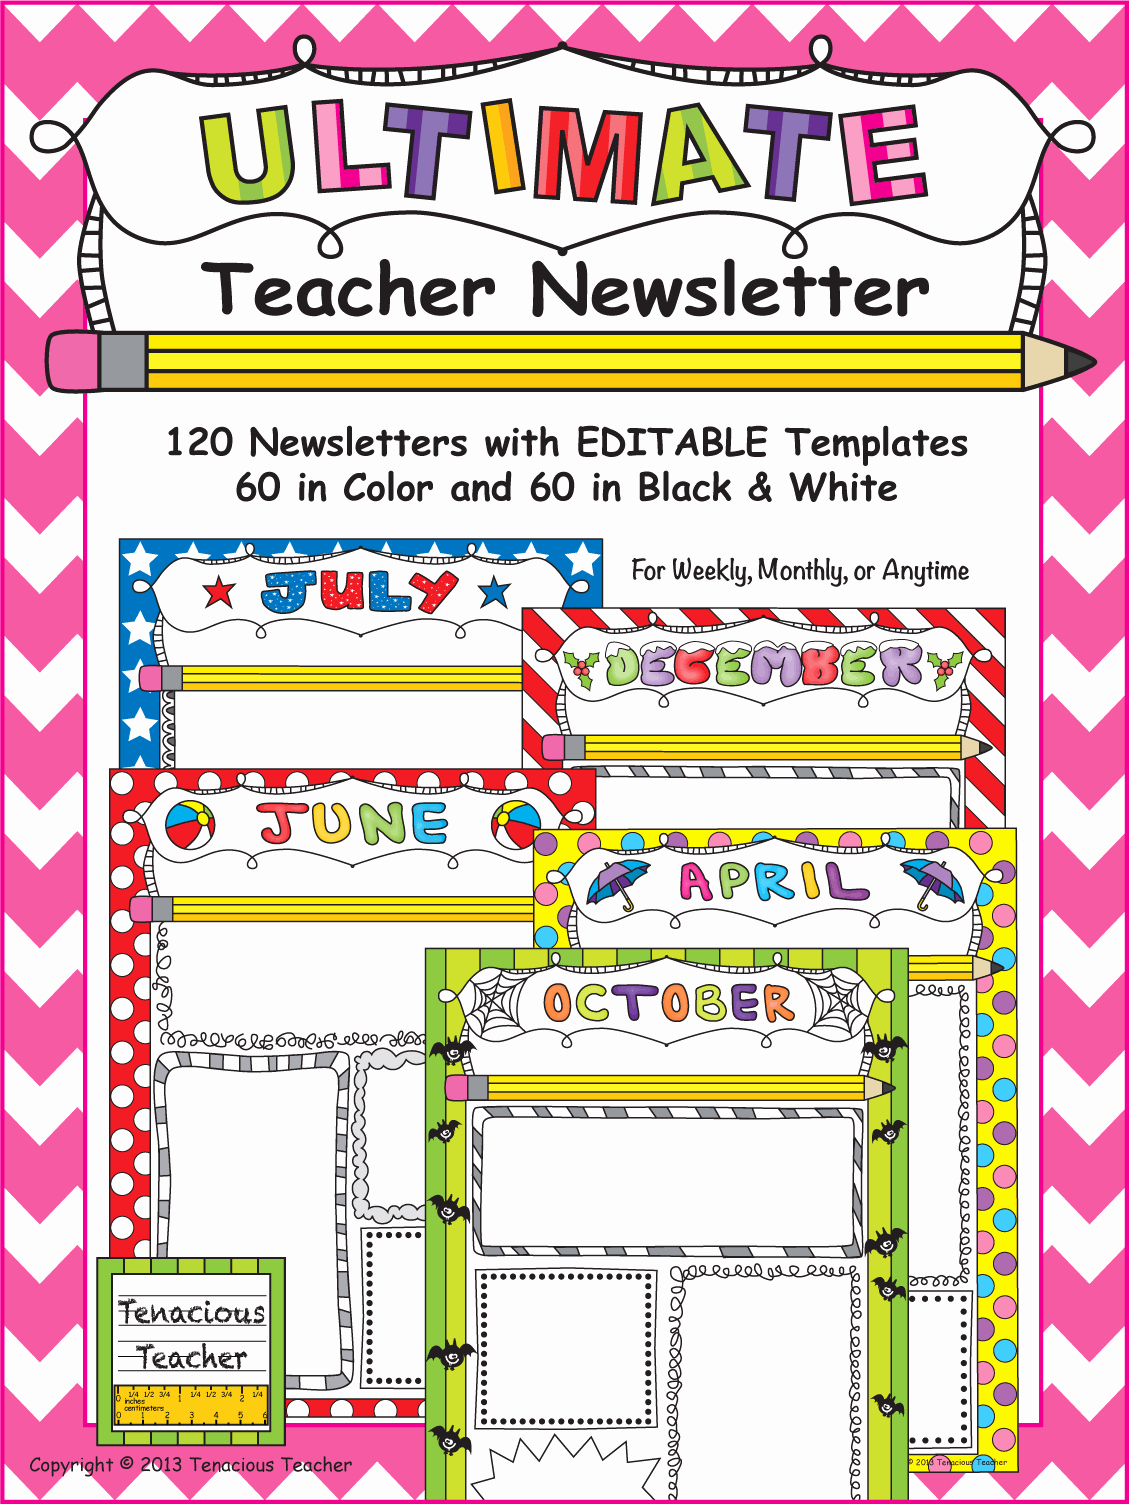 News Letter Templates for Teachers Beautiful Ultimate Teacher Newsletter